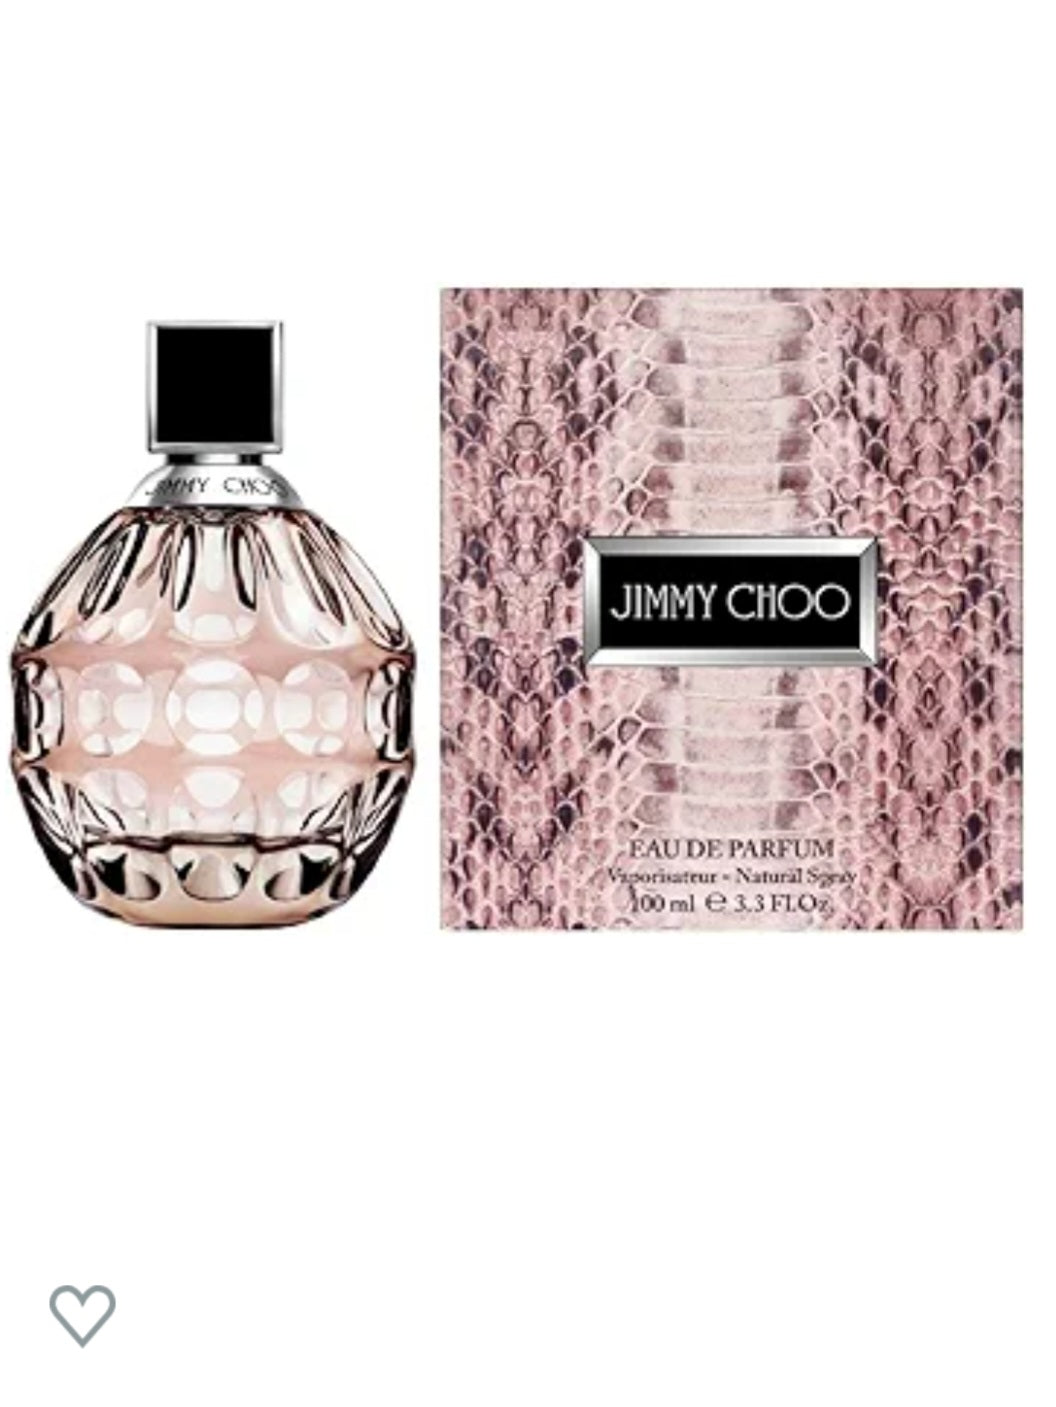 Jimmy Choo Original Eau de Parfum 100Ml